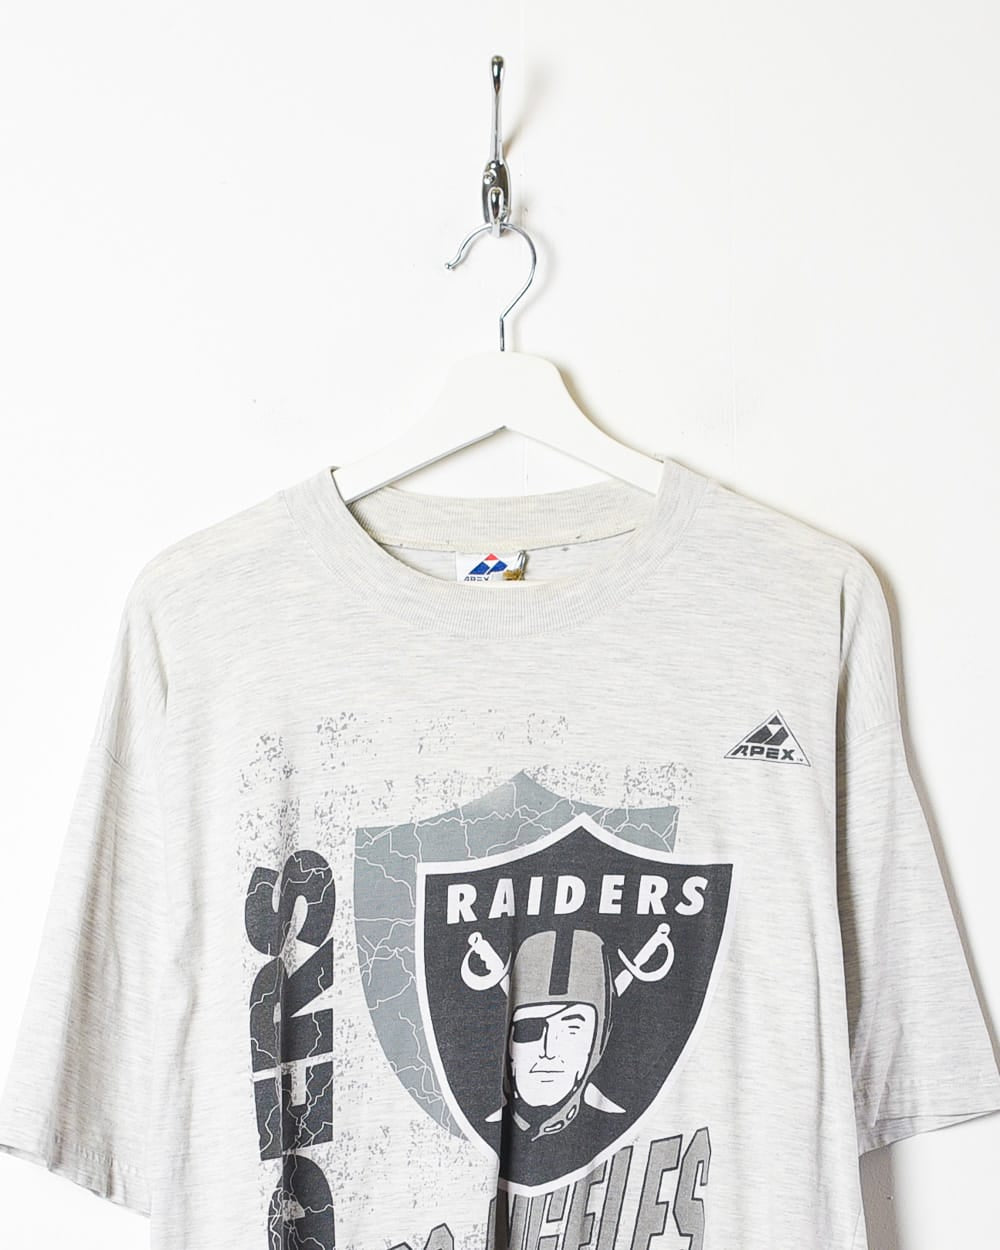 Stone Apex One Los Angeles Raiders Graphic T-Shirt - X-Large